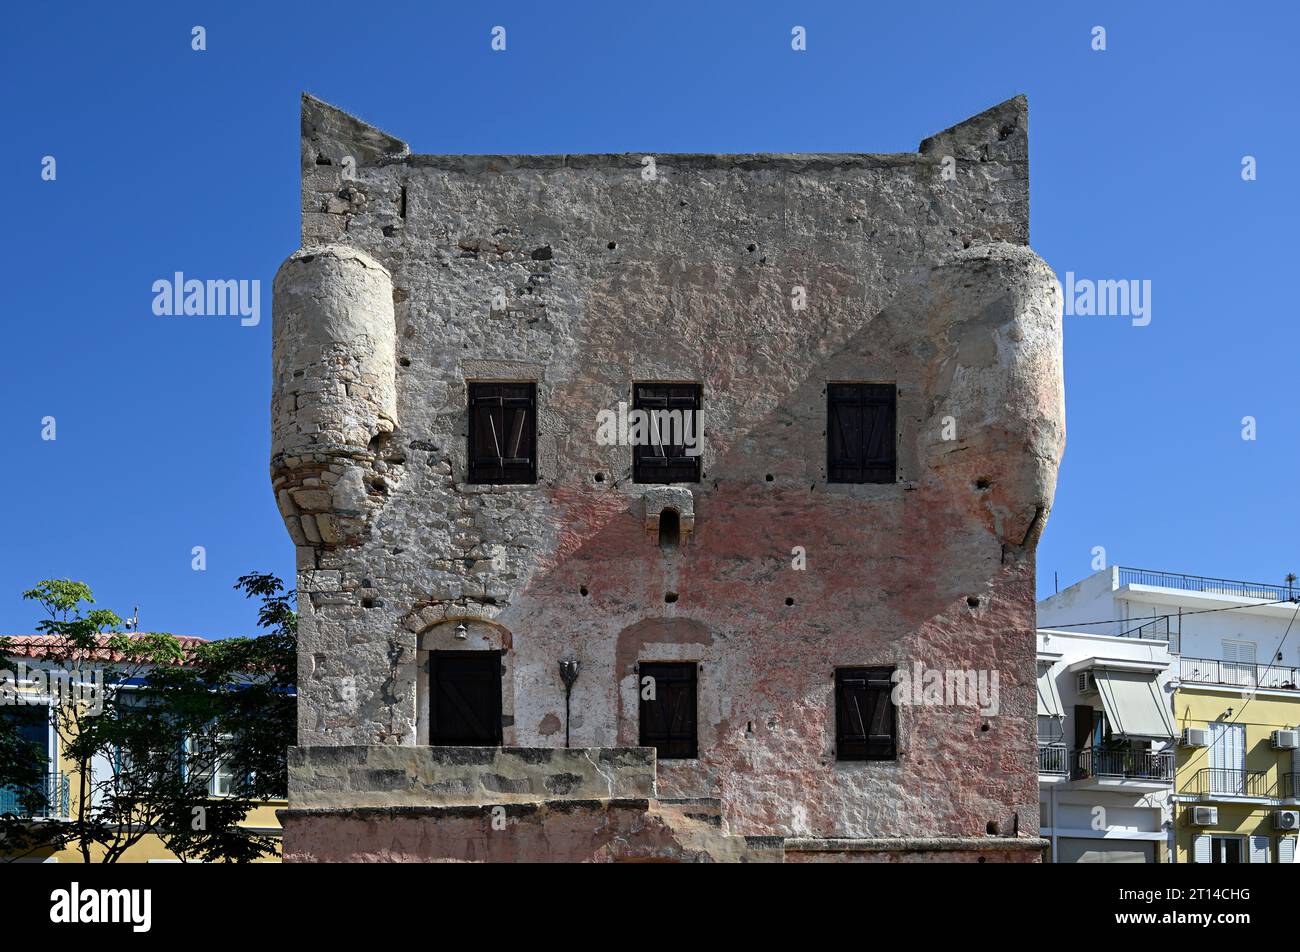 The Tower of Markellos in Aegina town, Aegina island, Greece Stock Photo